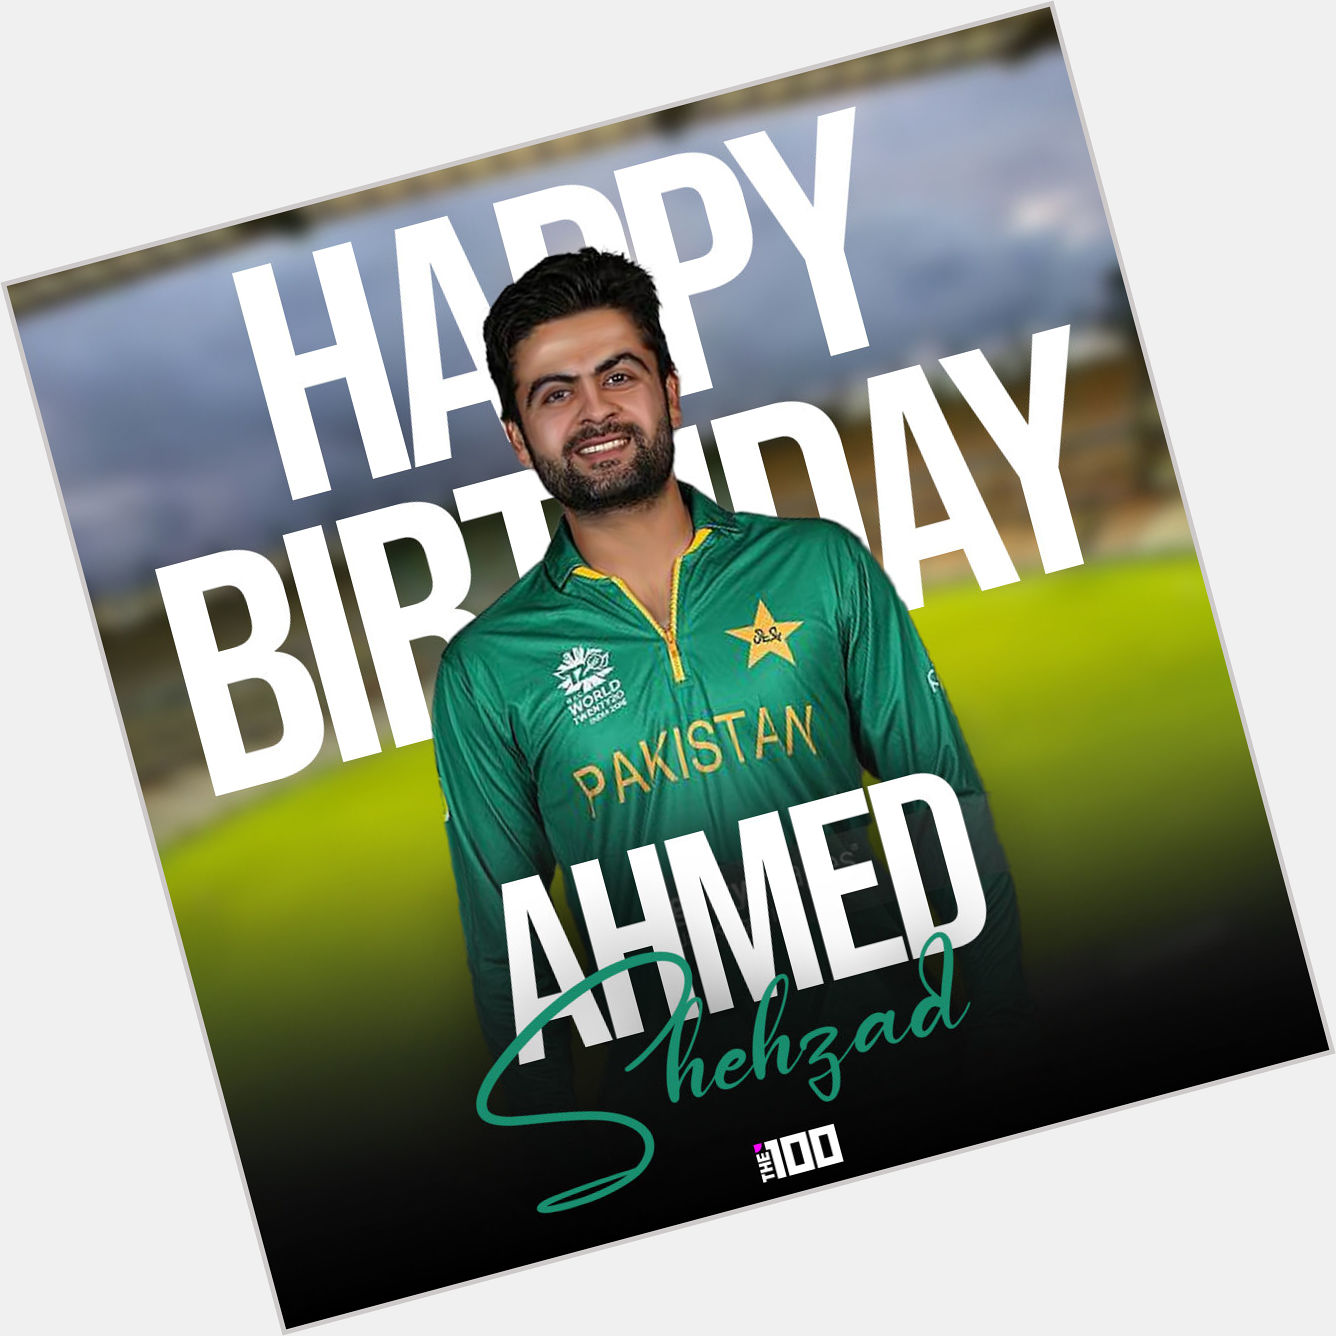 Wishing a very Happy Birthday to Pakistani batsmen Ahmed Shehzad  